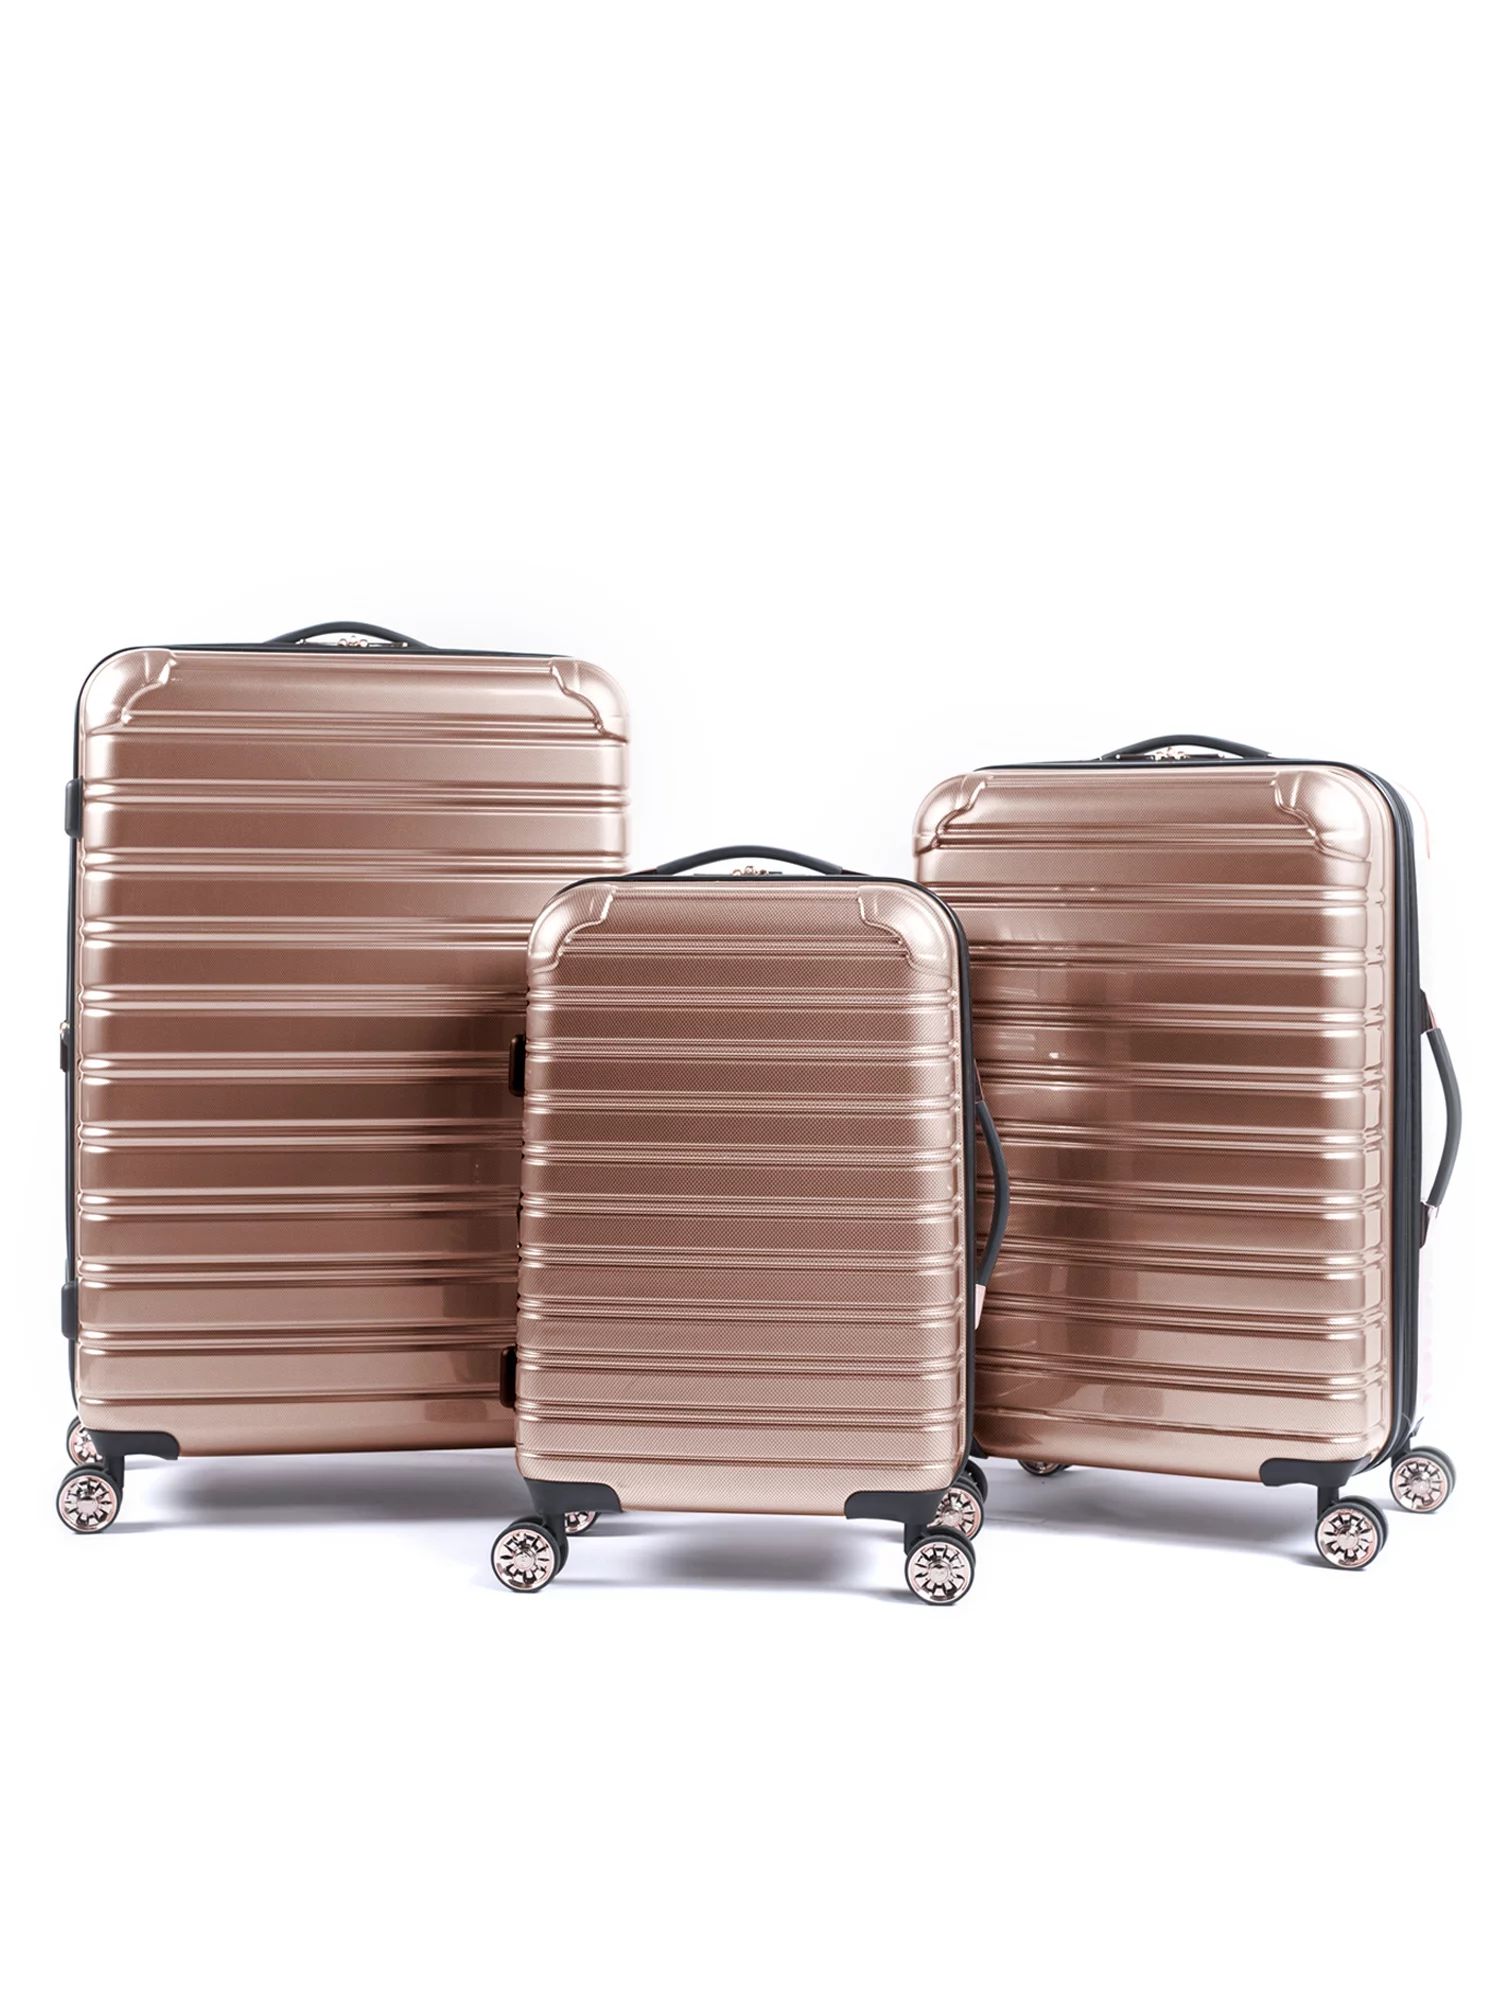 iFLY Hardside Fibertech Luggage 3 Pc Set, 20" Carry-on, 24" & 28" Checked Luggage, Rose Gold | Walmart (US)